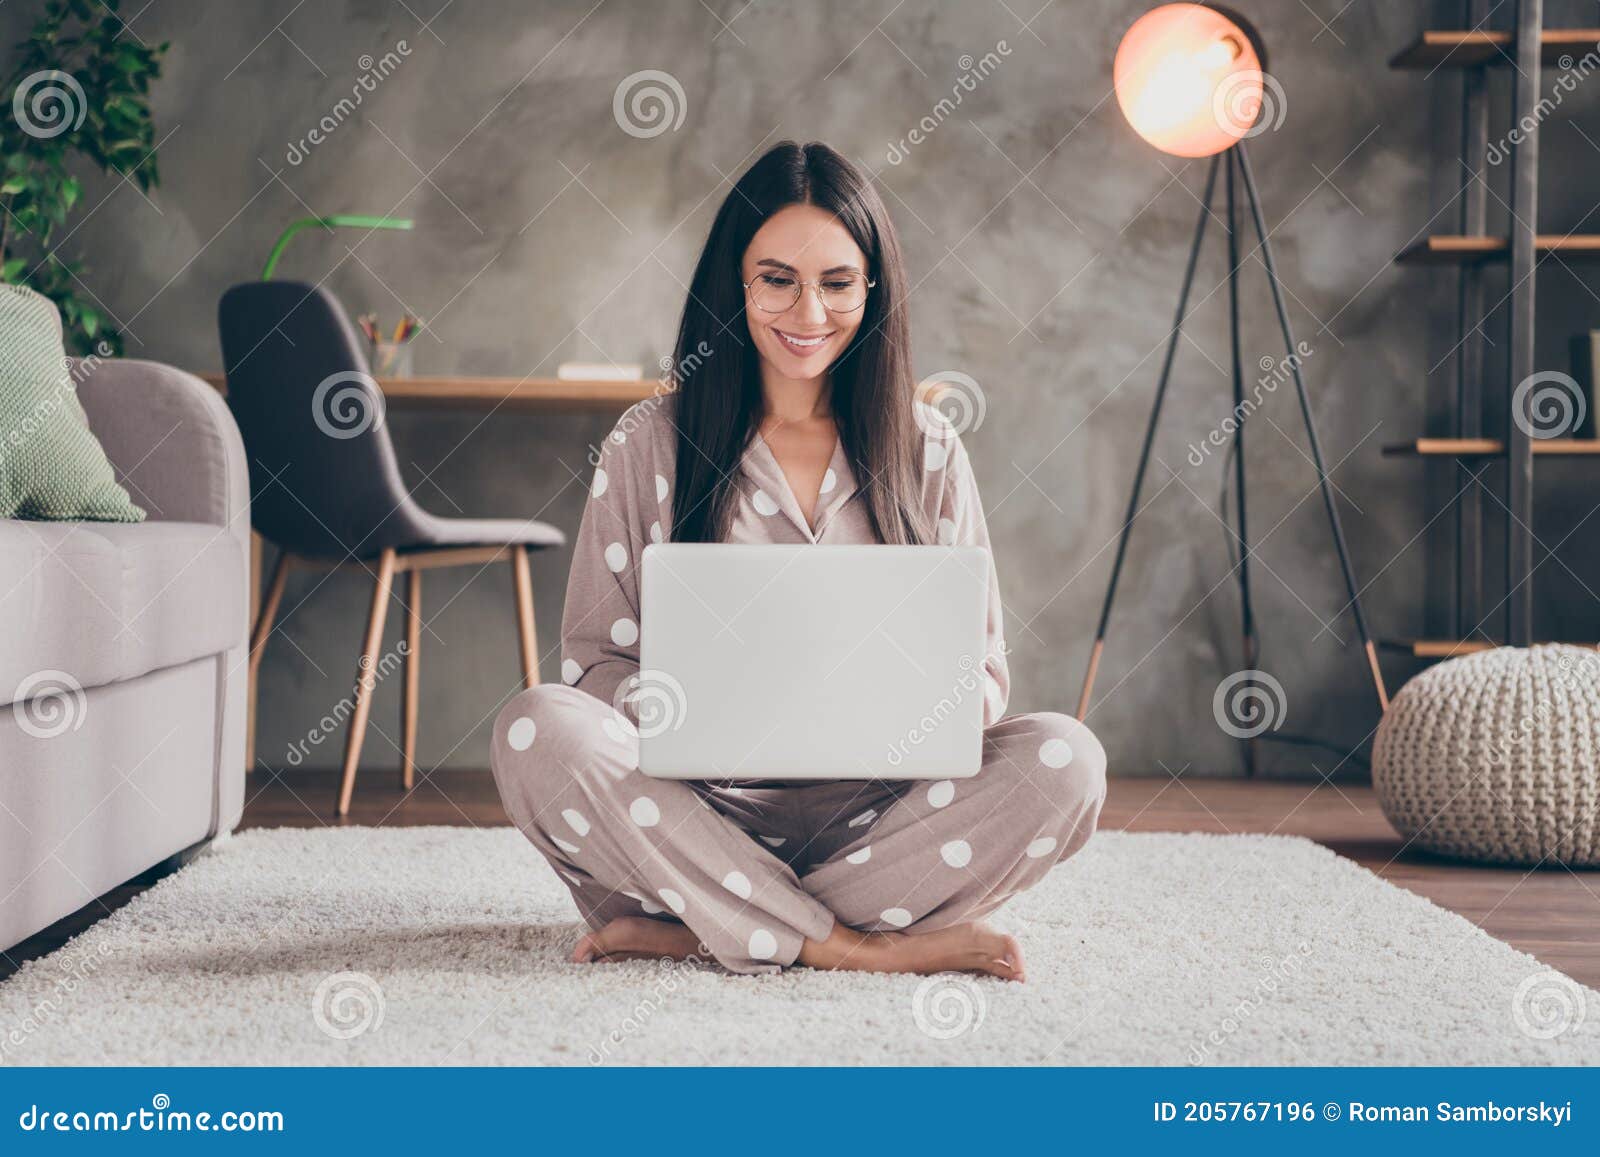 photo of nice sweet girl sit on carpet type laptop wear spectacles pijama at home